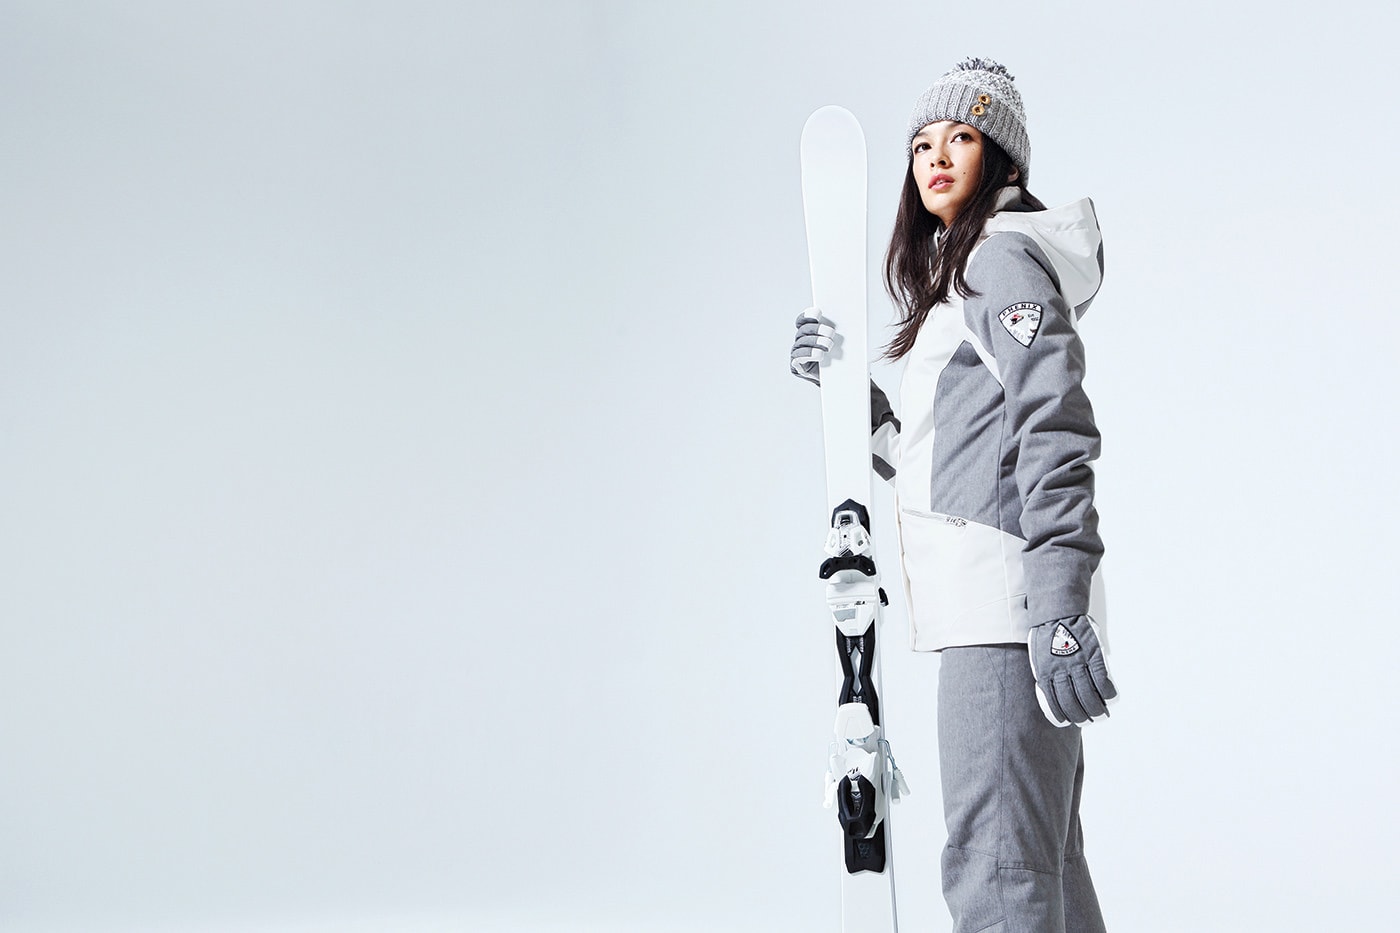 phenix Ski Fall Winter 2017 Lookbook All Japan National Team Orca Shell